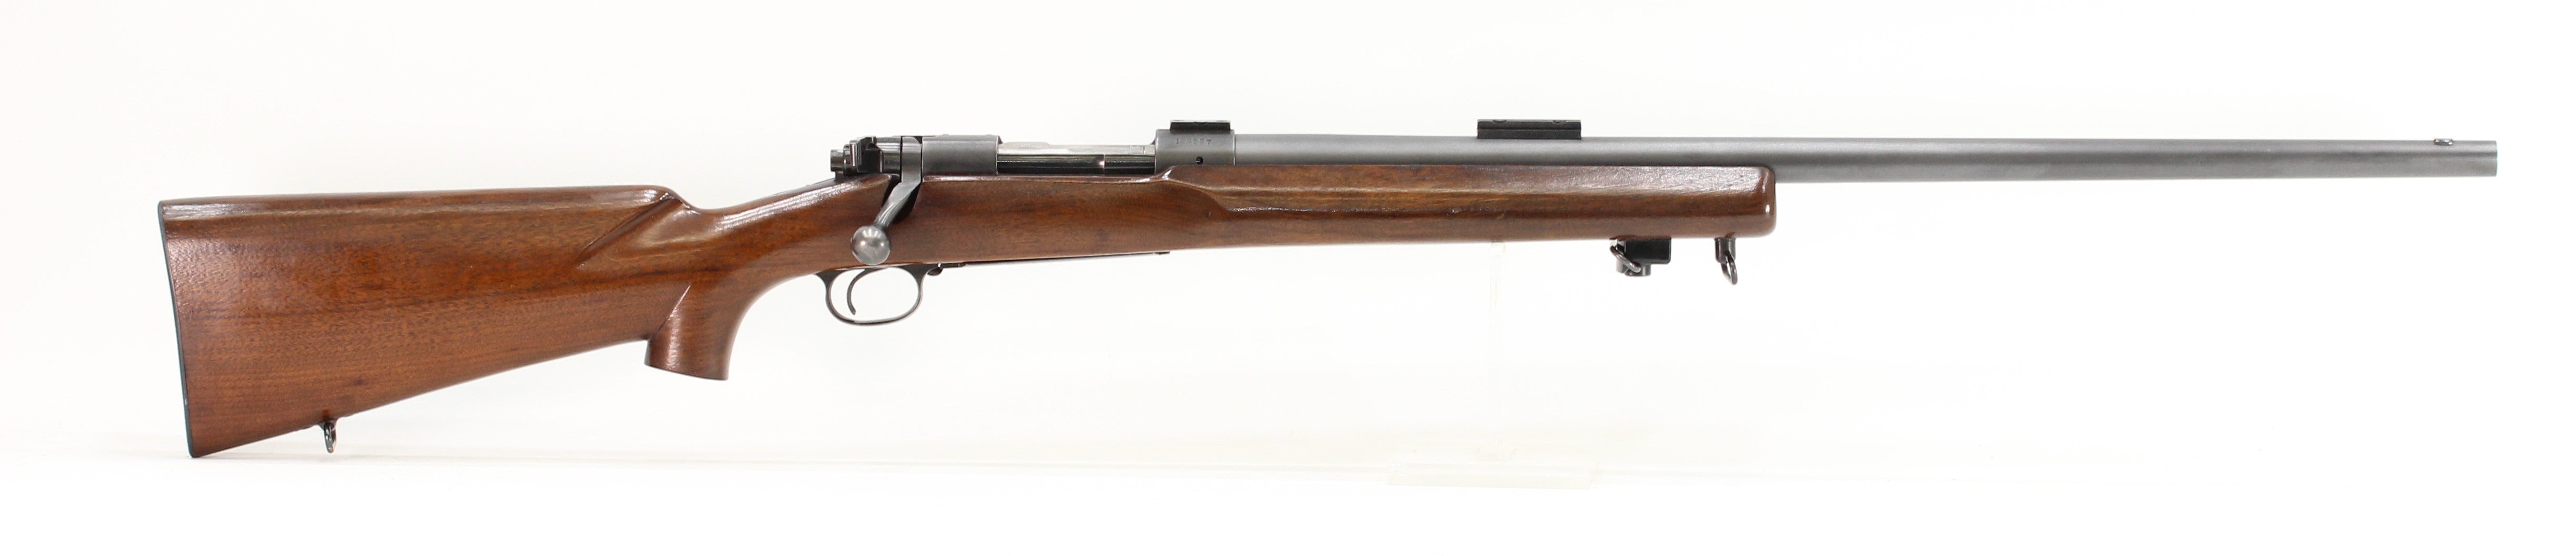 .220 Swift Target Rifle - 1949